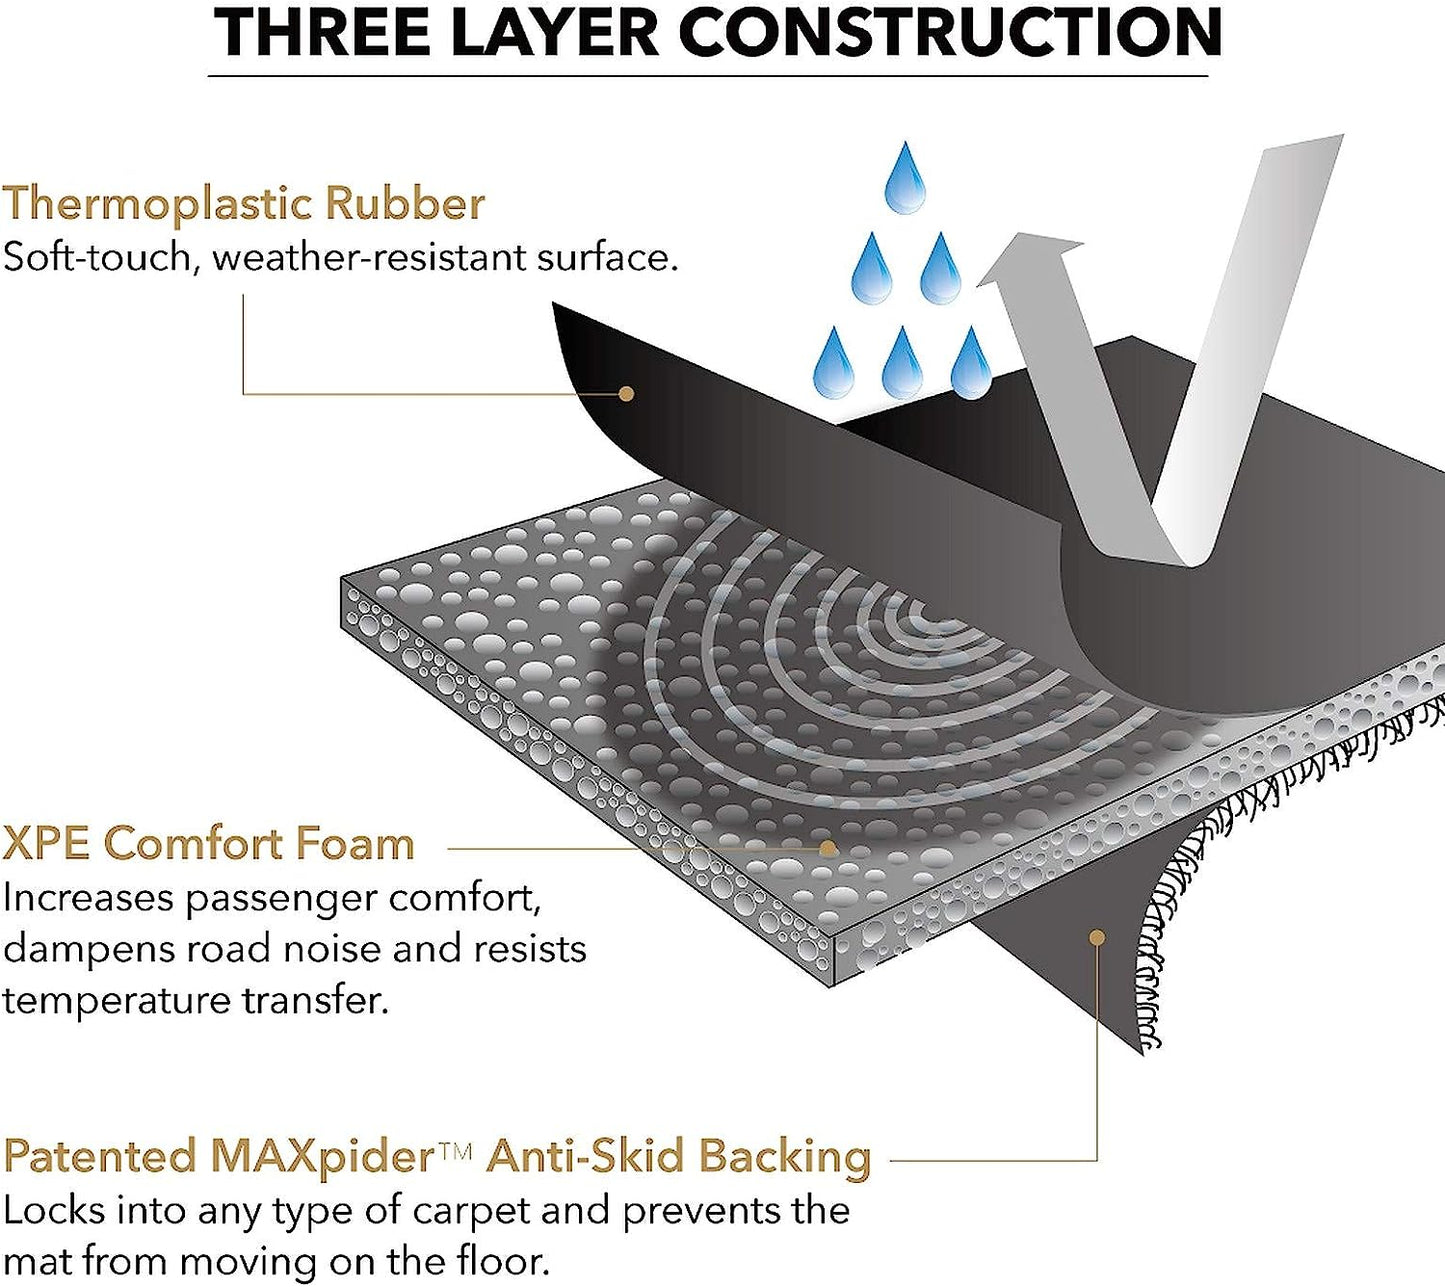 3D MAXpider Custom Fit Floor Liner Black for 2011-2022 INFINITI QX80